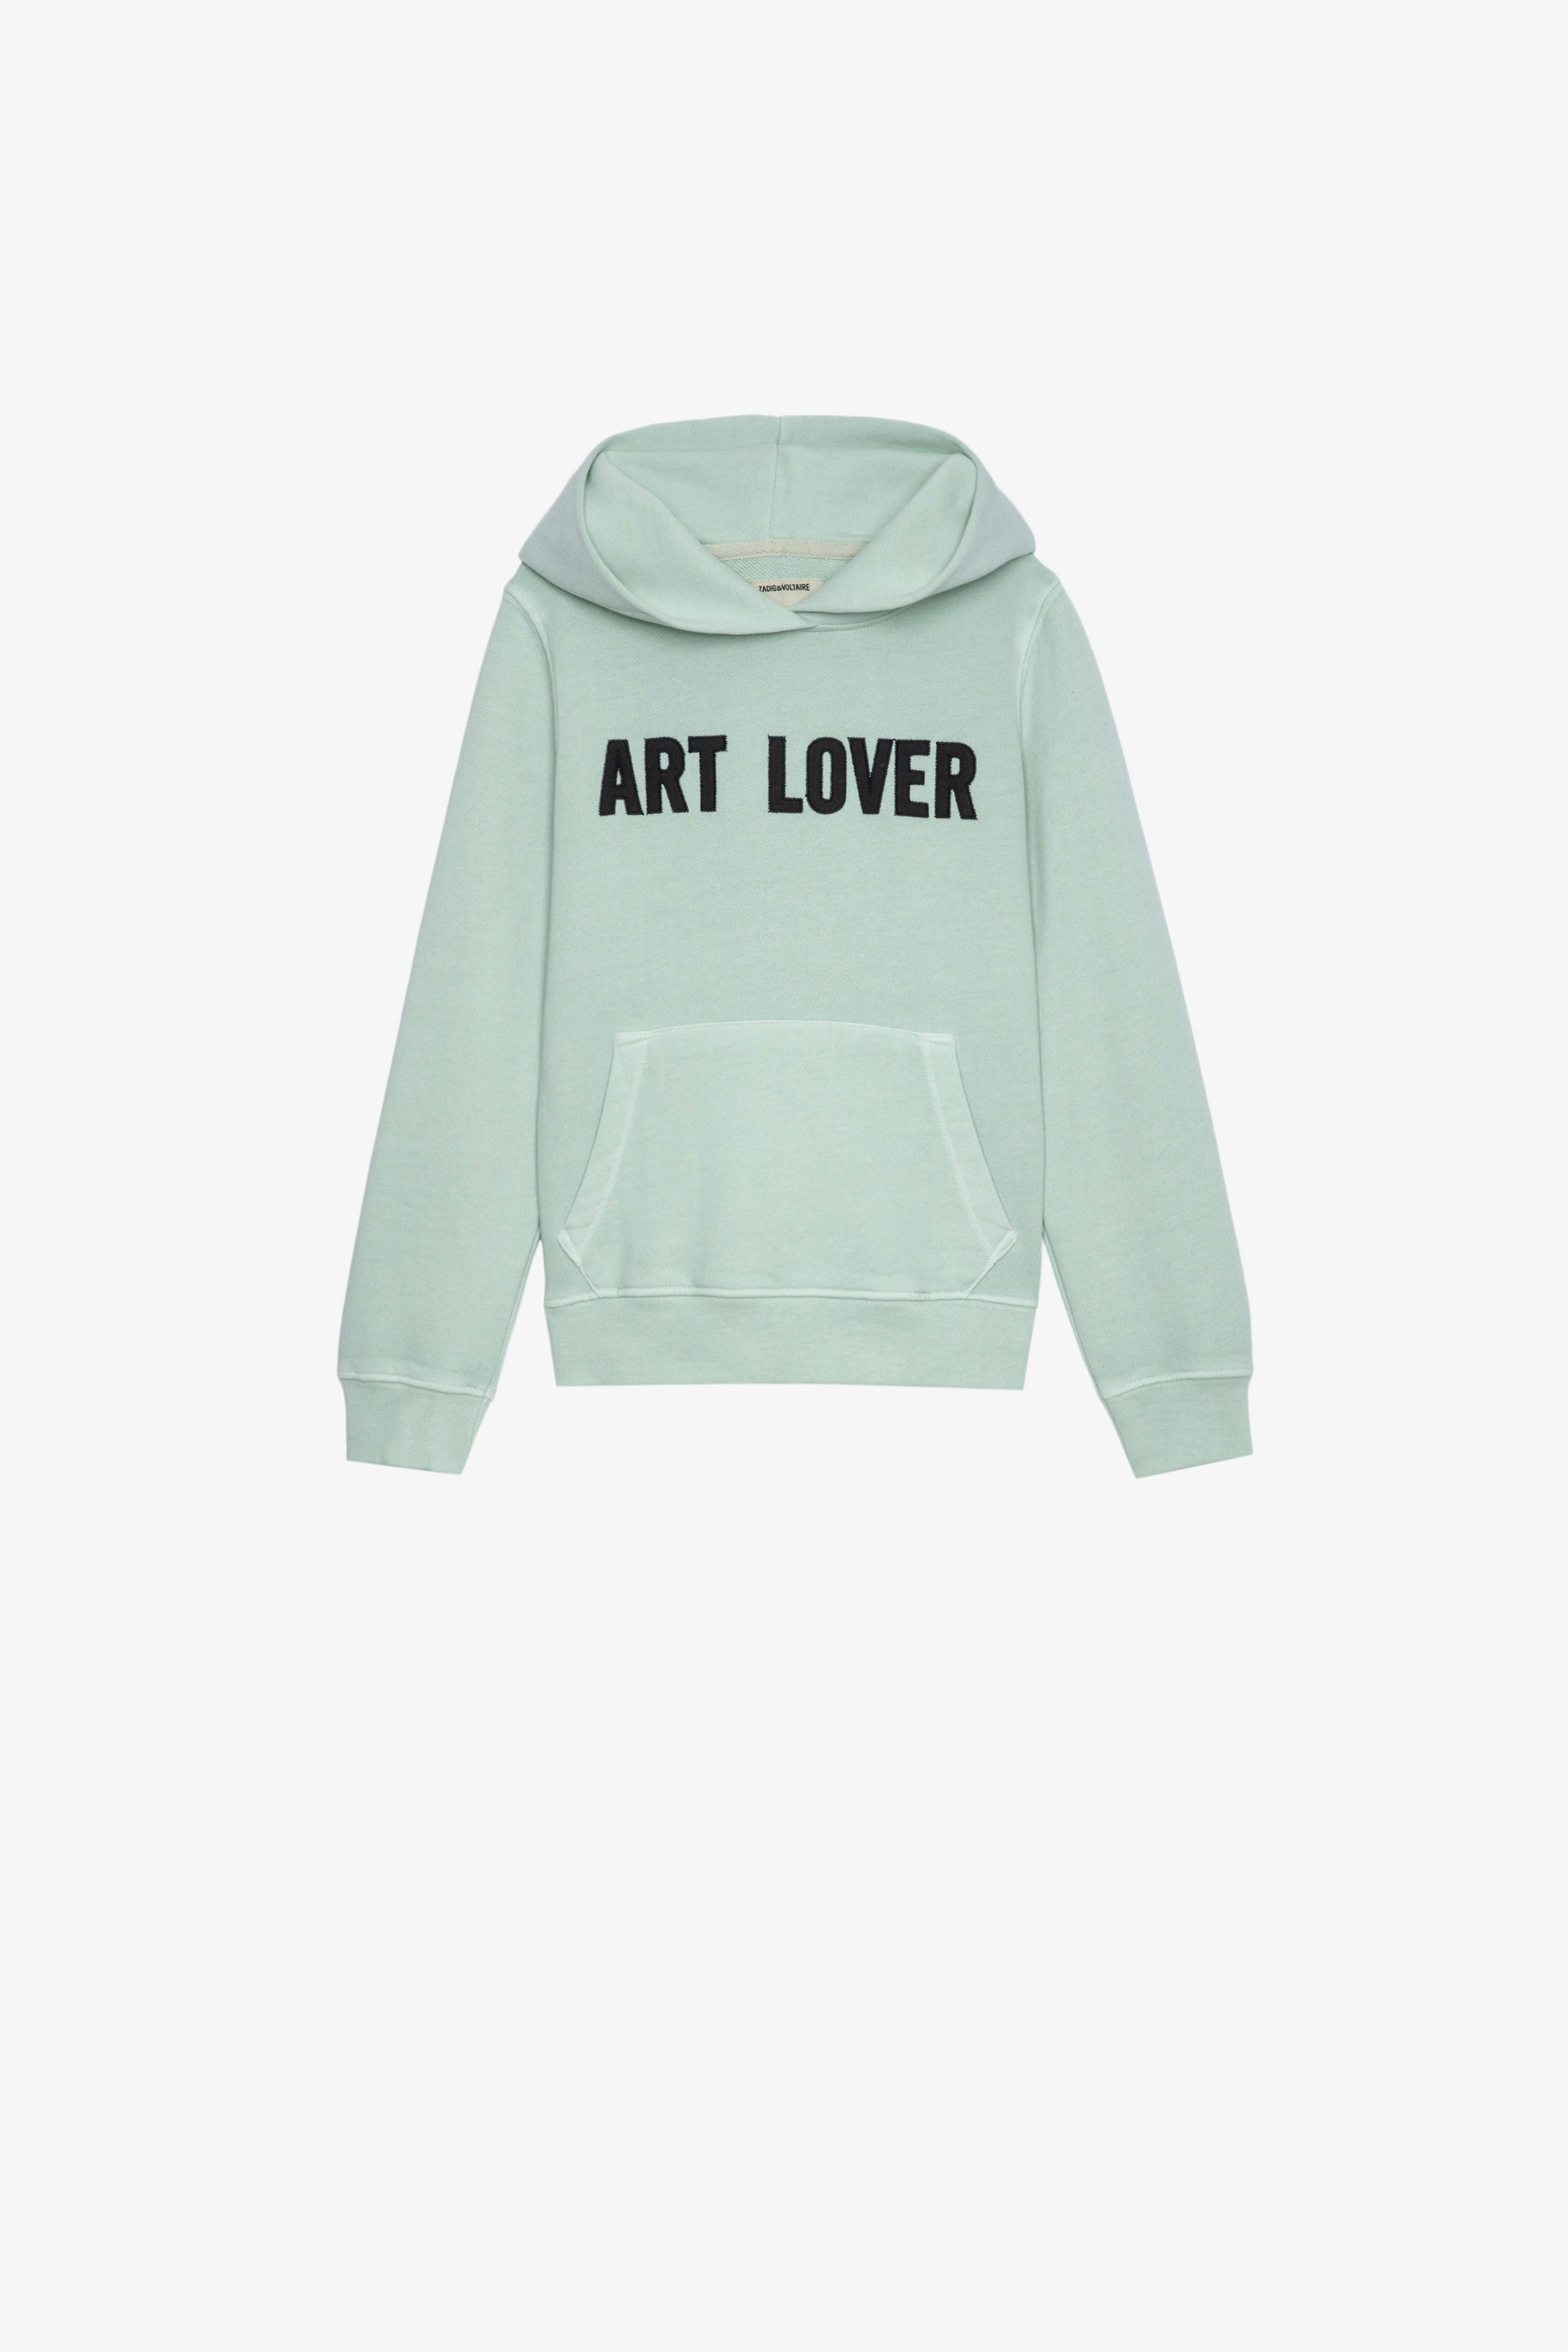 Sanchi Kids' Sweatshirt Kids’ light green cotton hoodie with “Art lover” slogan